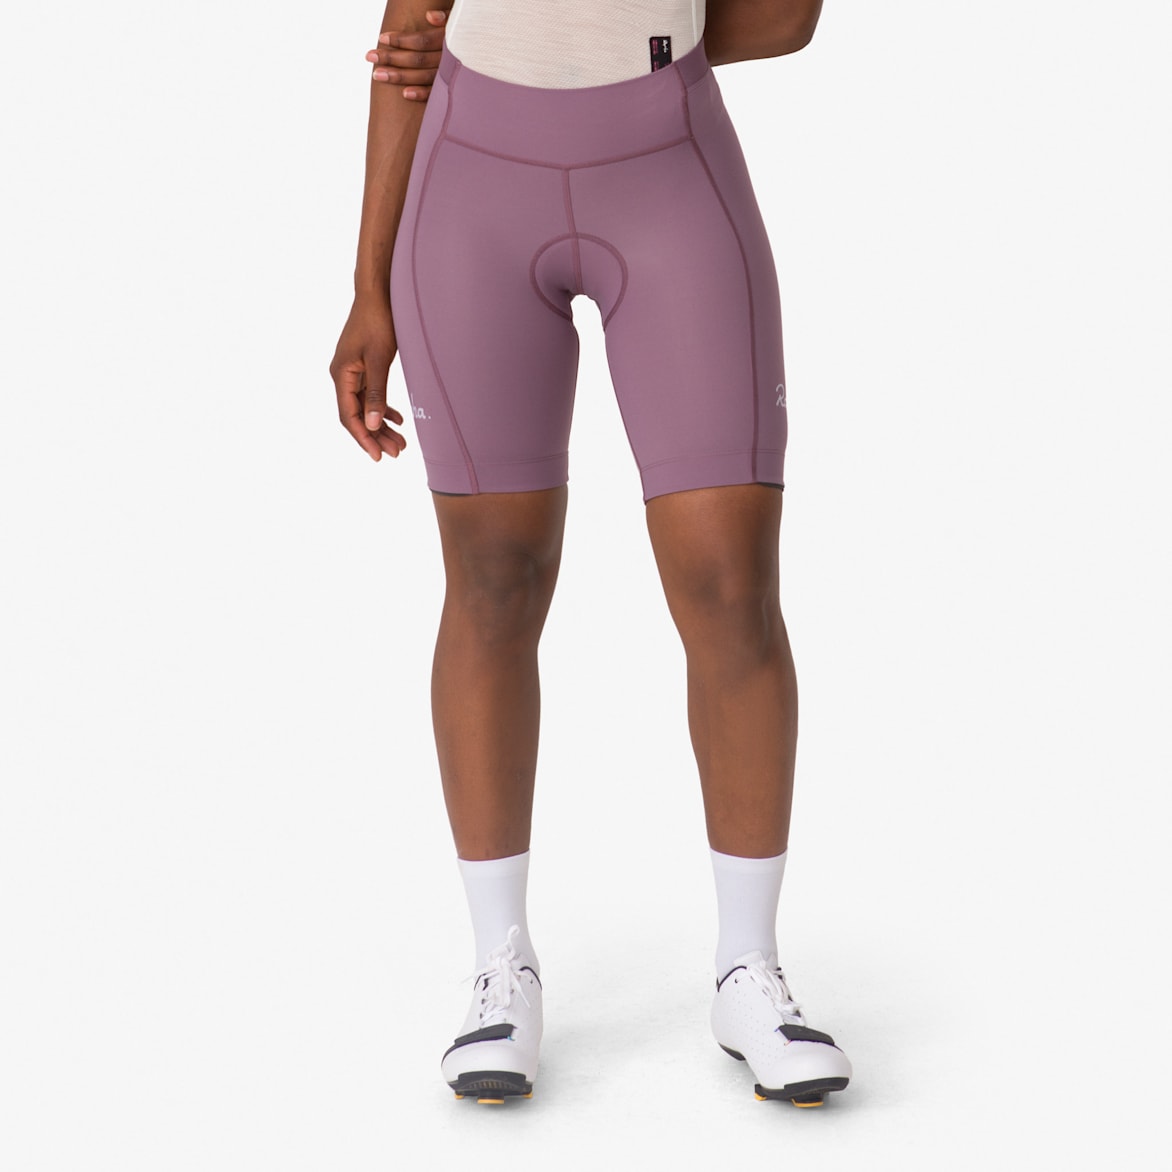 Women's Classic Shorts - Regular